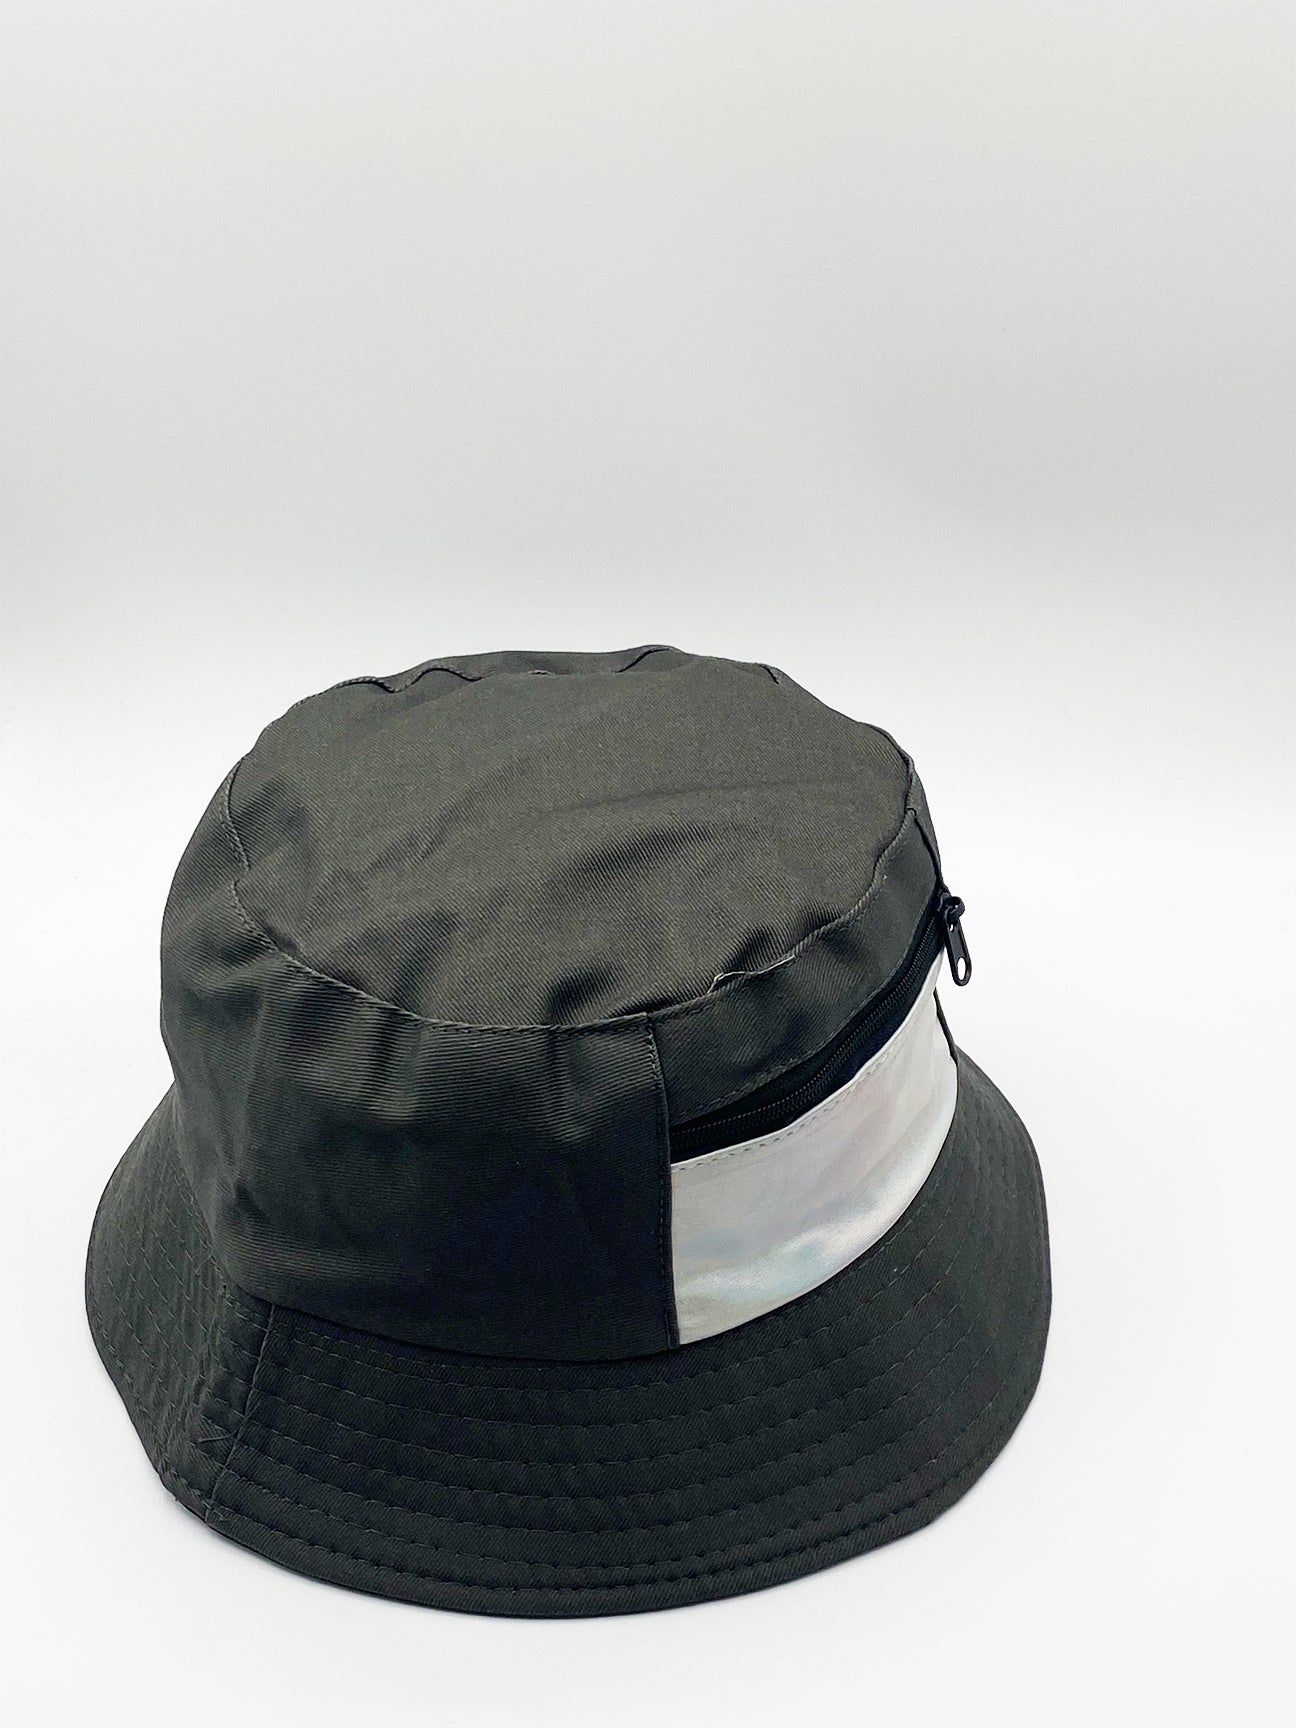 Khaki Bucket Hat with Iridescent Pocket Detail